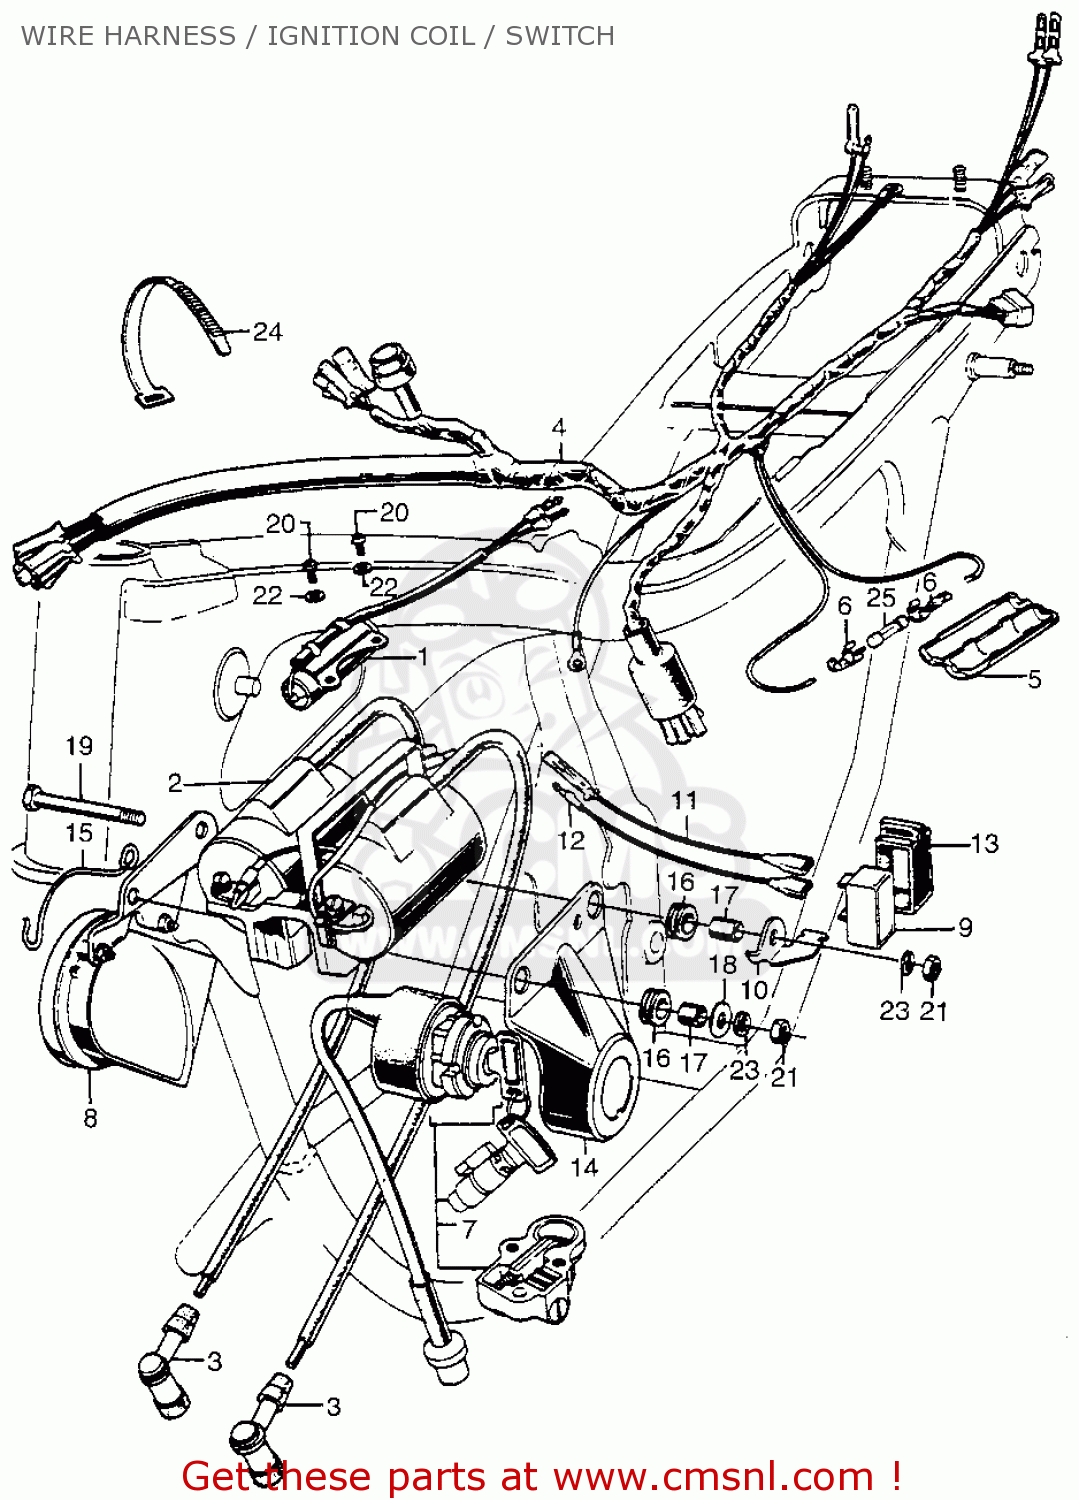 1972 Honda Cb450 Parts Diagram | hobbiesxstyle 1970 honda 350 cb wiring 